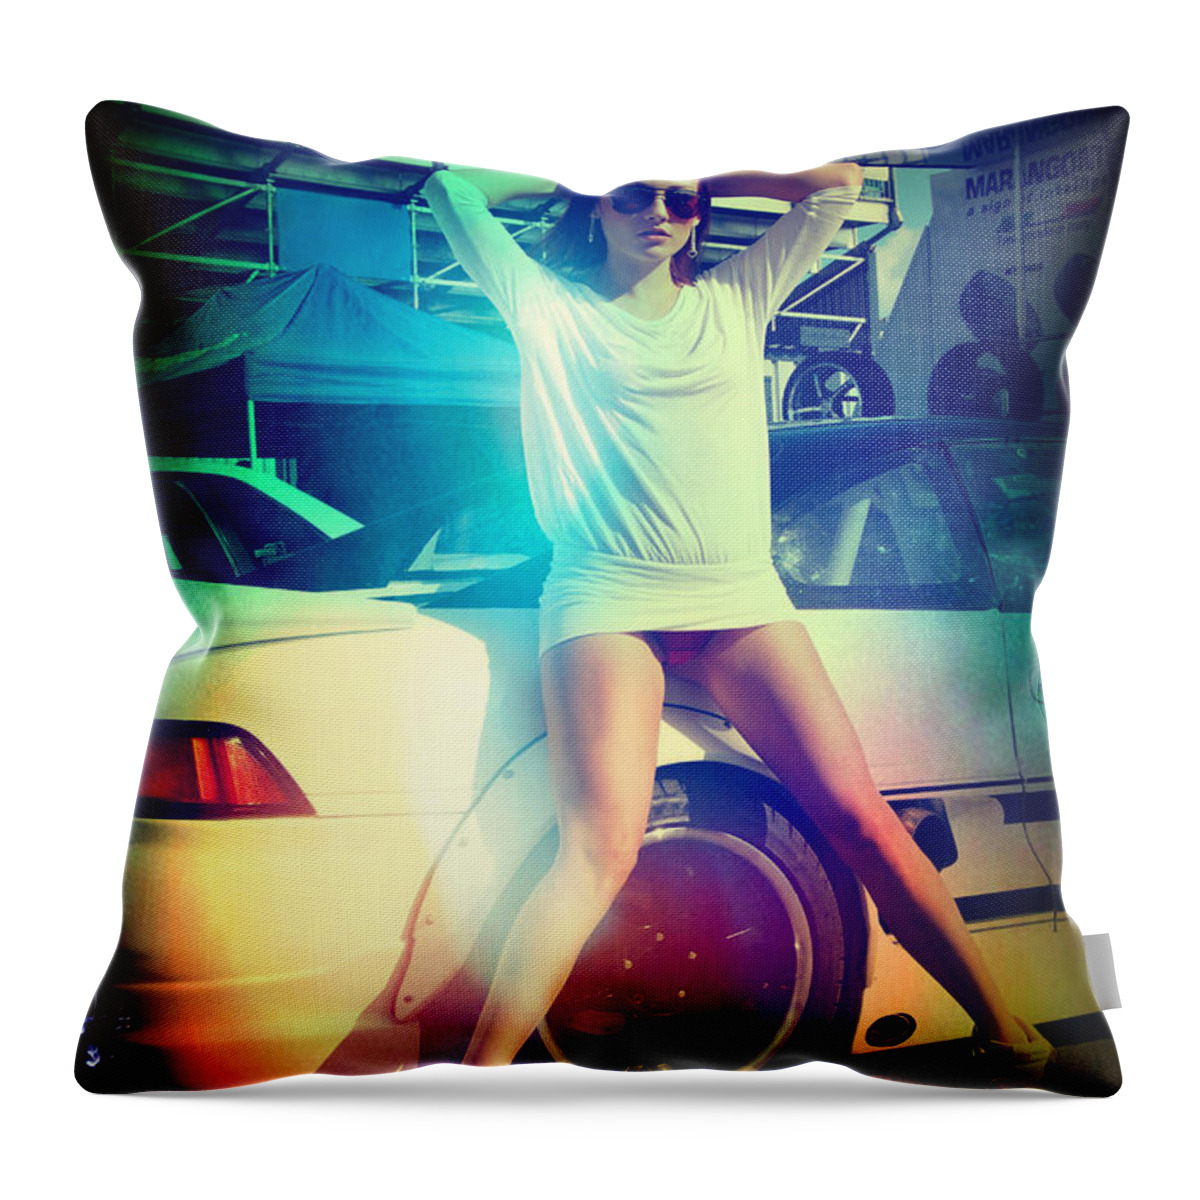 Yhun Suarez Throw Pillow featuring the photograph Sexy Chick by Yhun Suarez